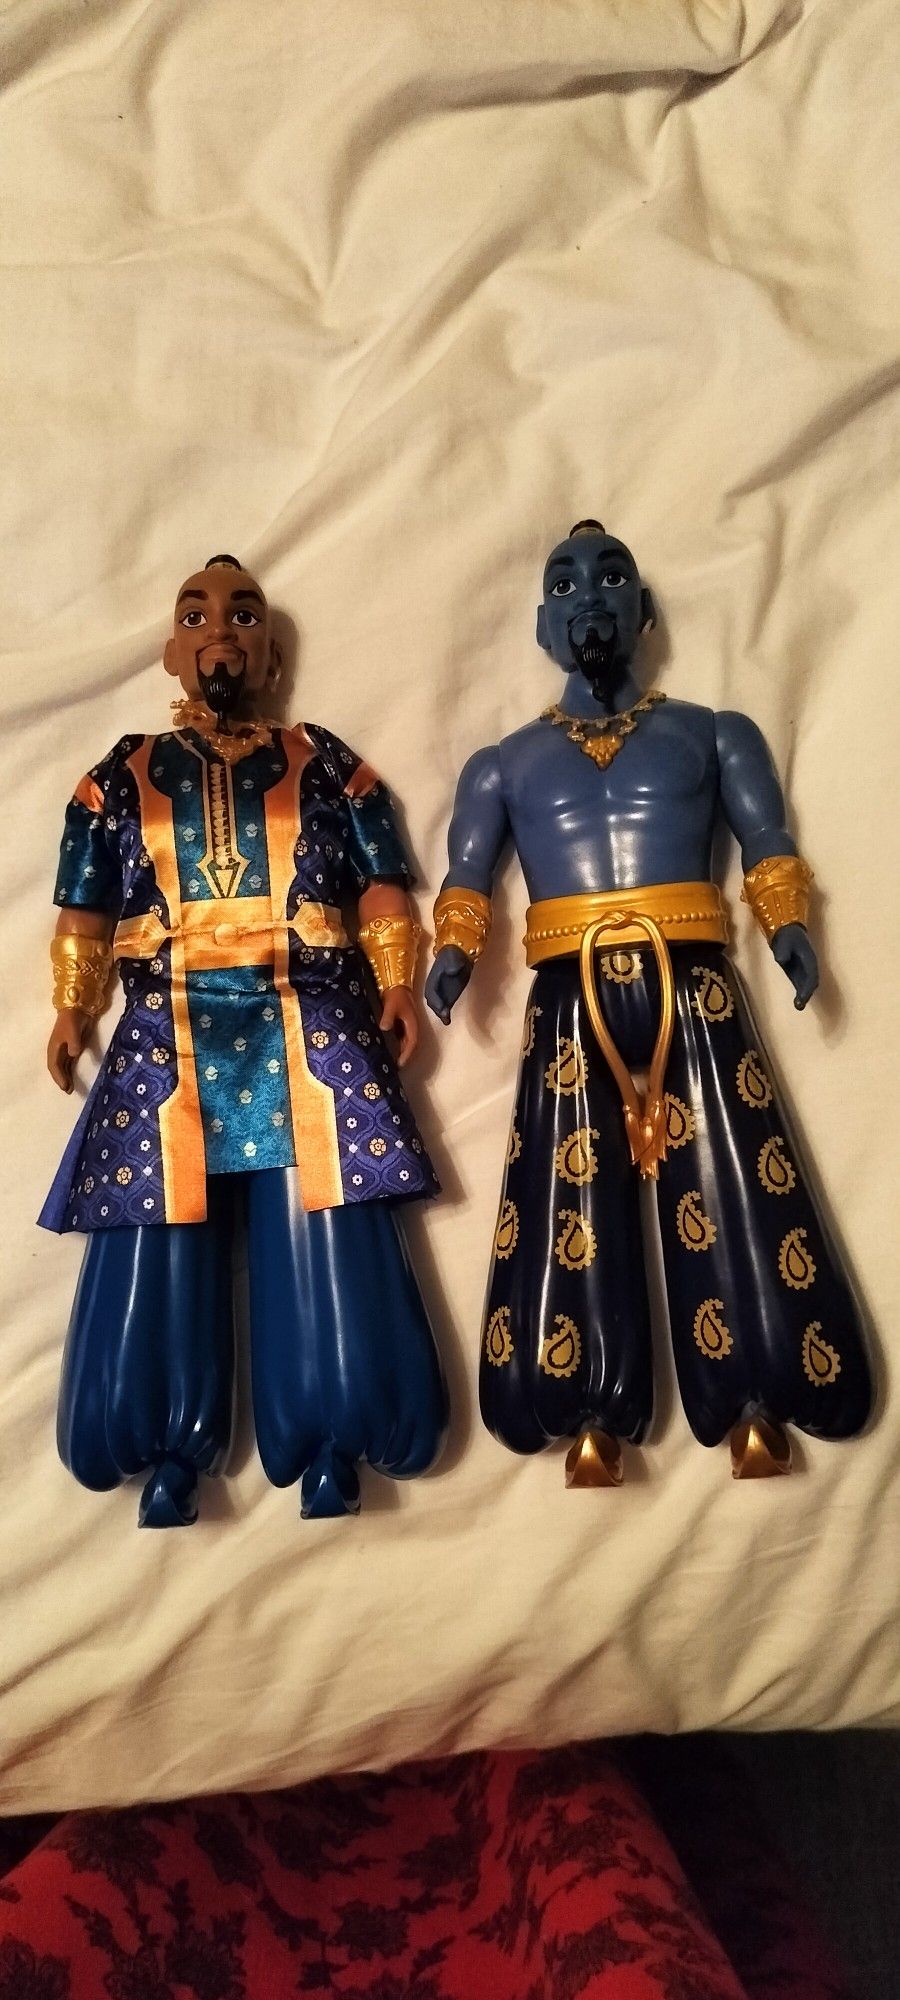 Disney's Two Aladdin Dolls C Descriptions $5 Each